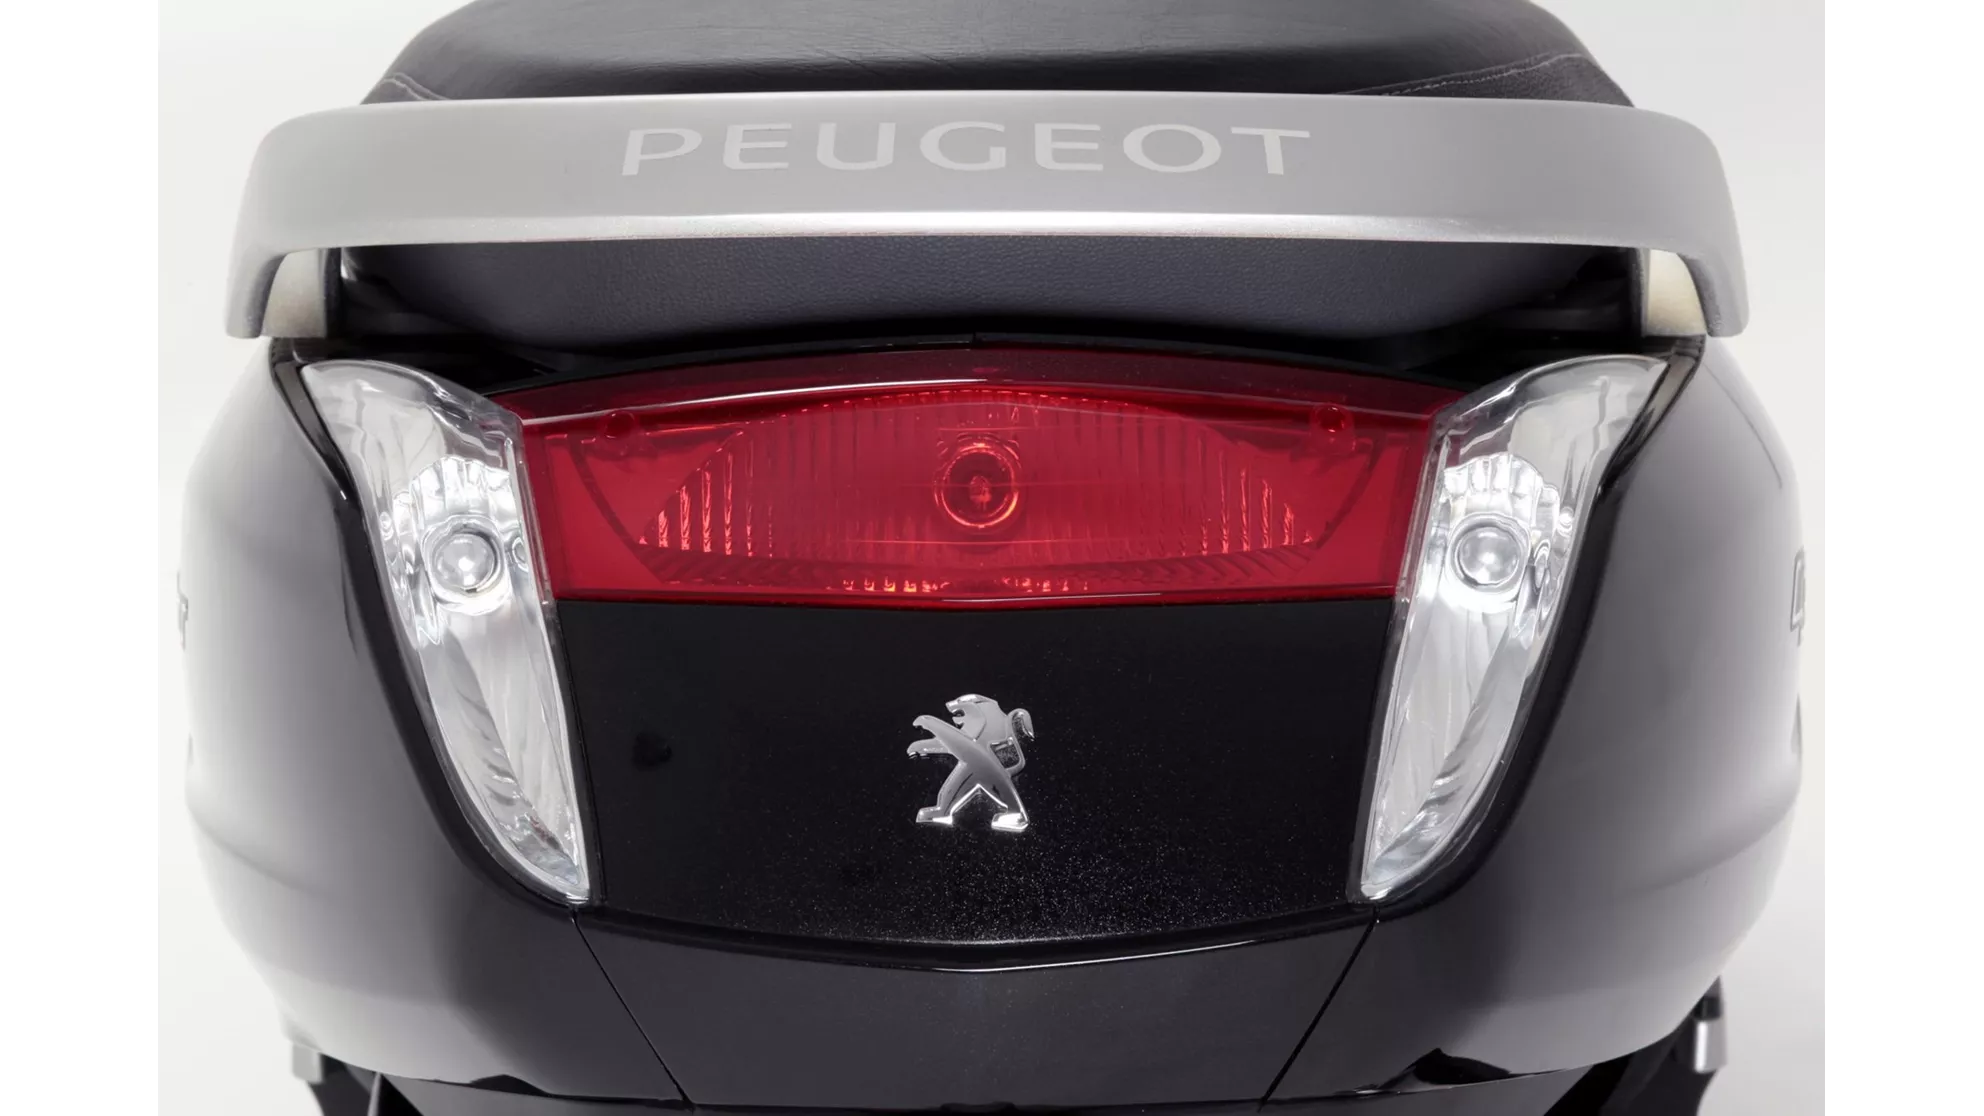 Peugeot Citystar 200 - Image 6